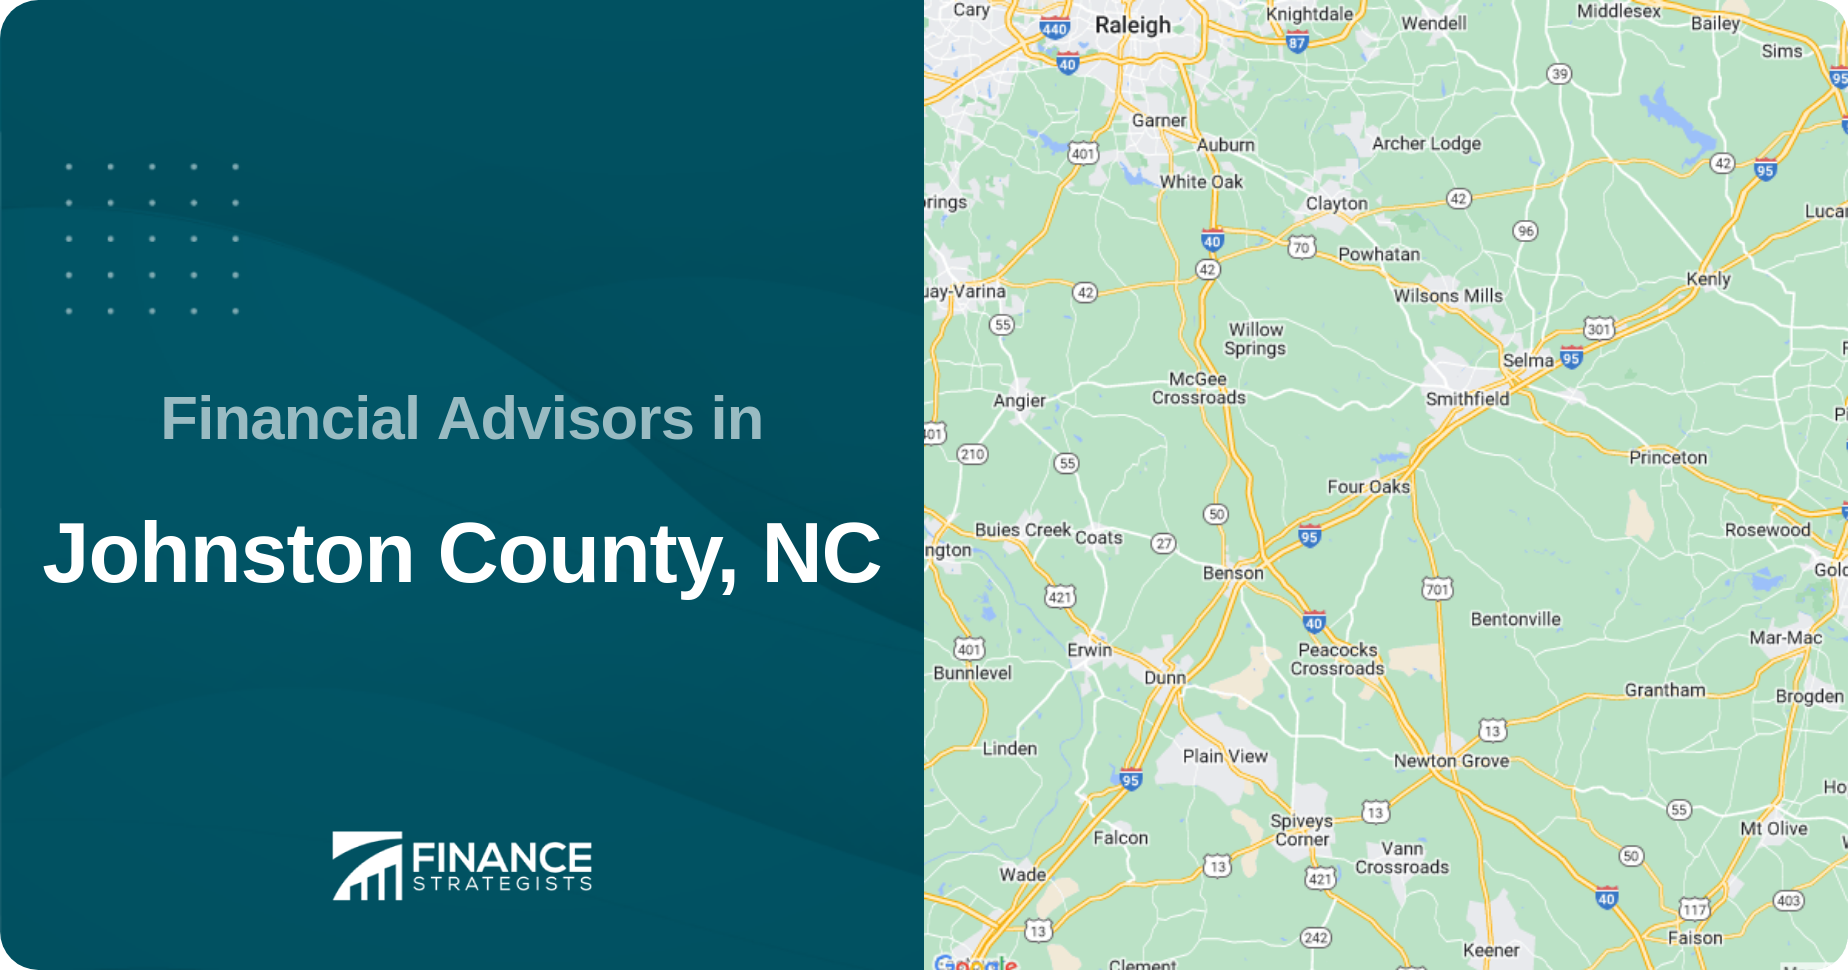 Financial Advisors in Johnston County, NC